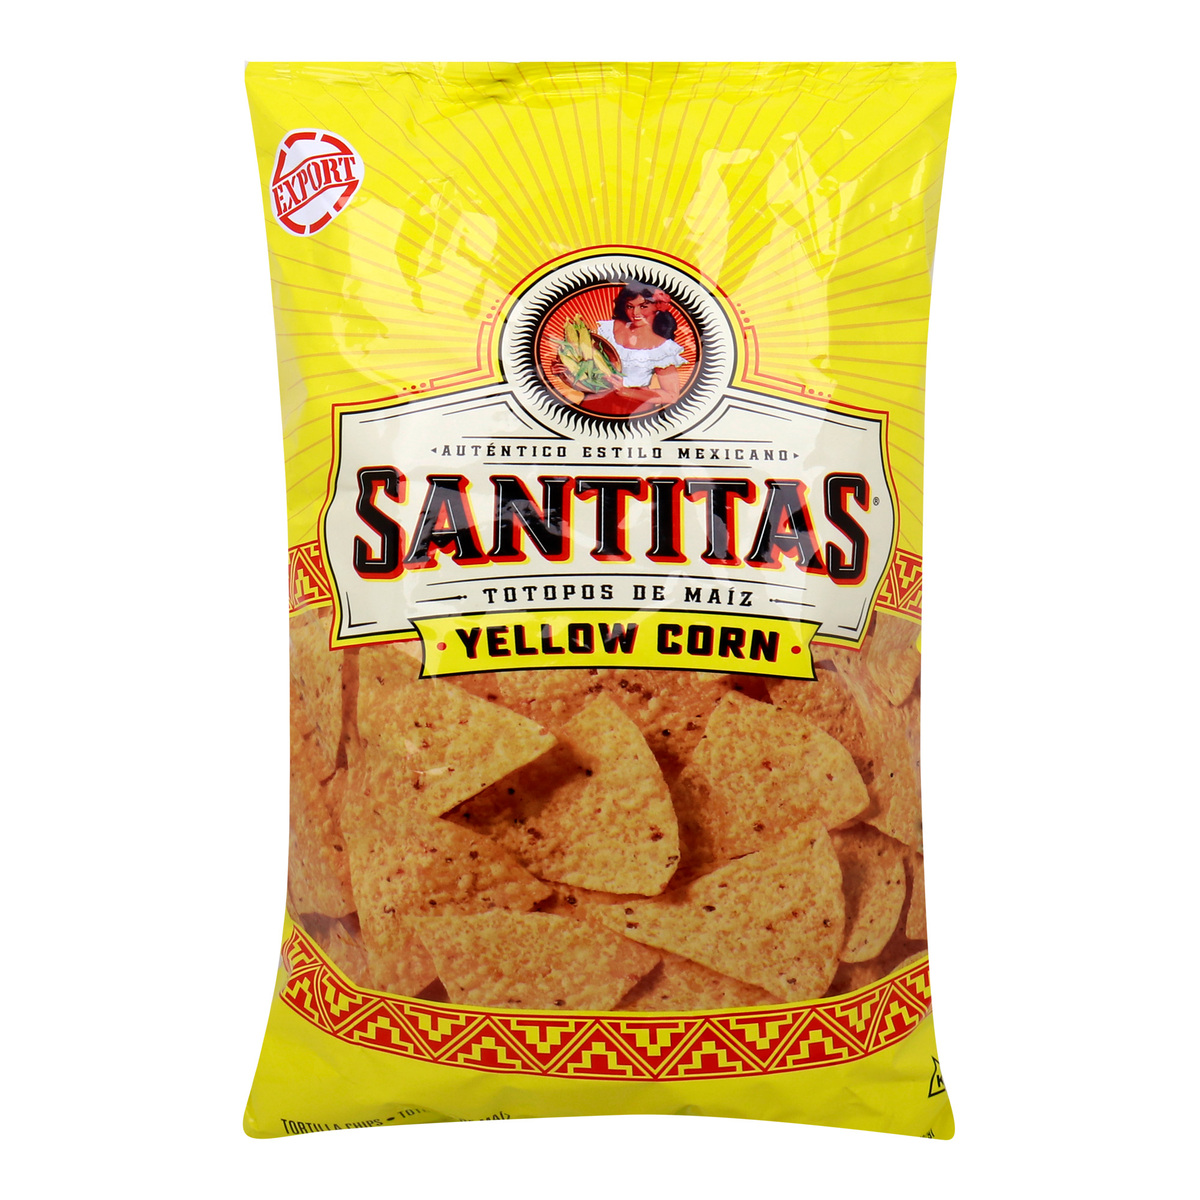 Santitas Tortilla Chips 10 oz